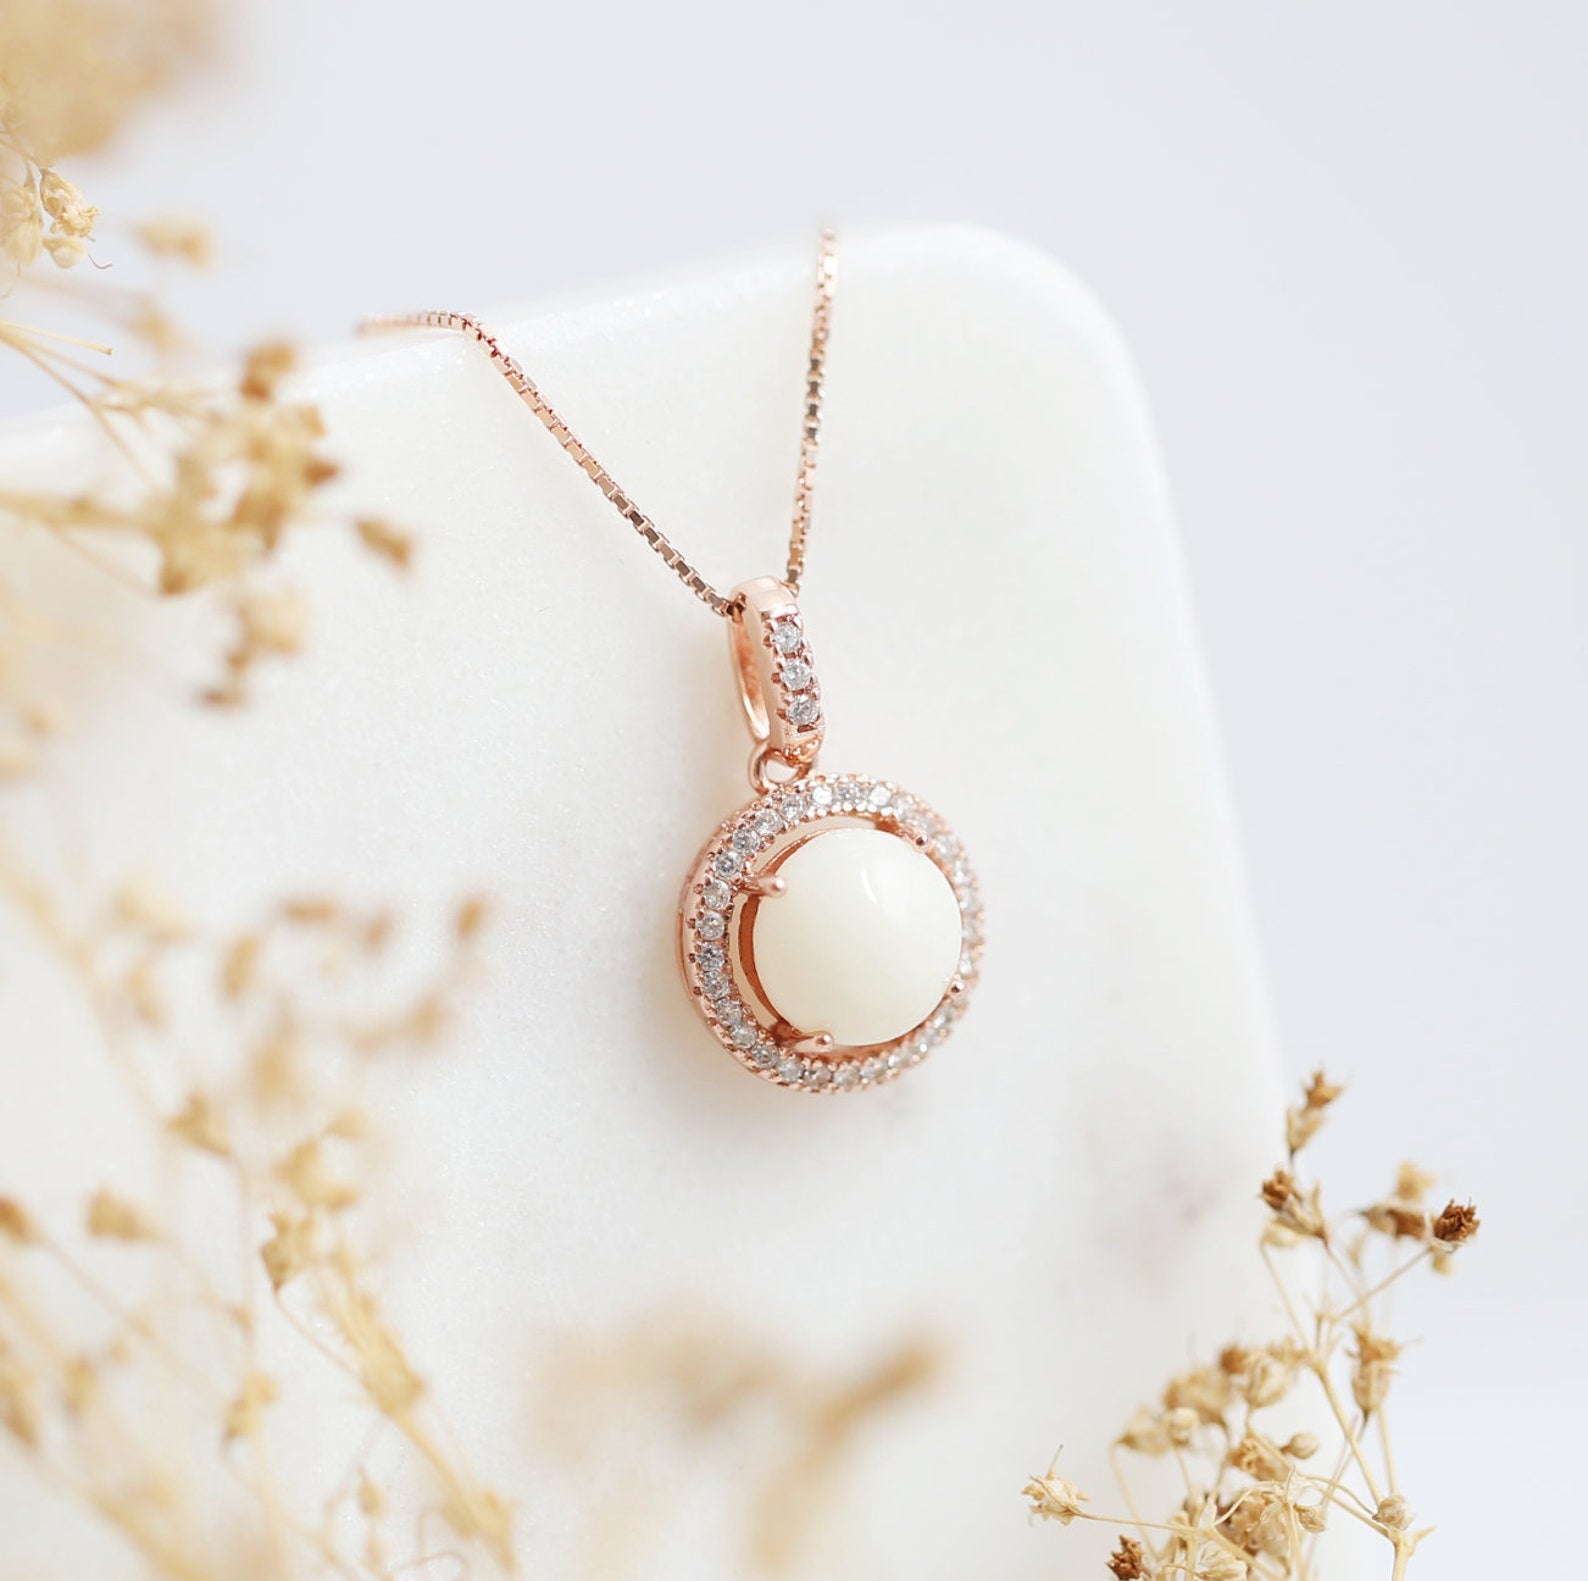  DIY Breast Milk Breastmilk Pendant Necklace Jewelry Making Kit  : Baby